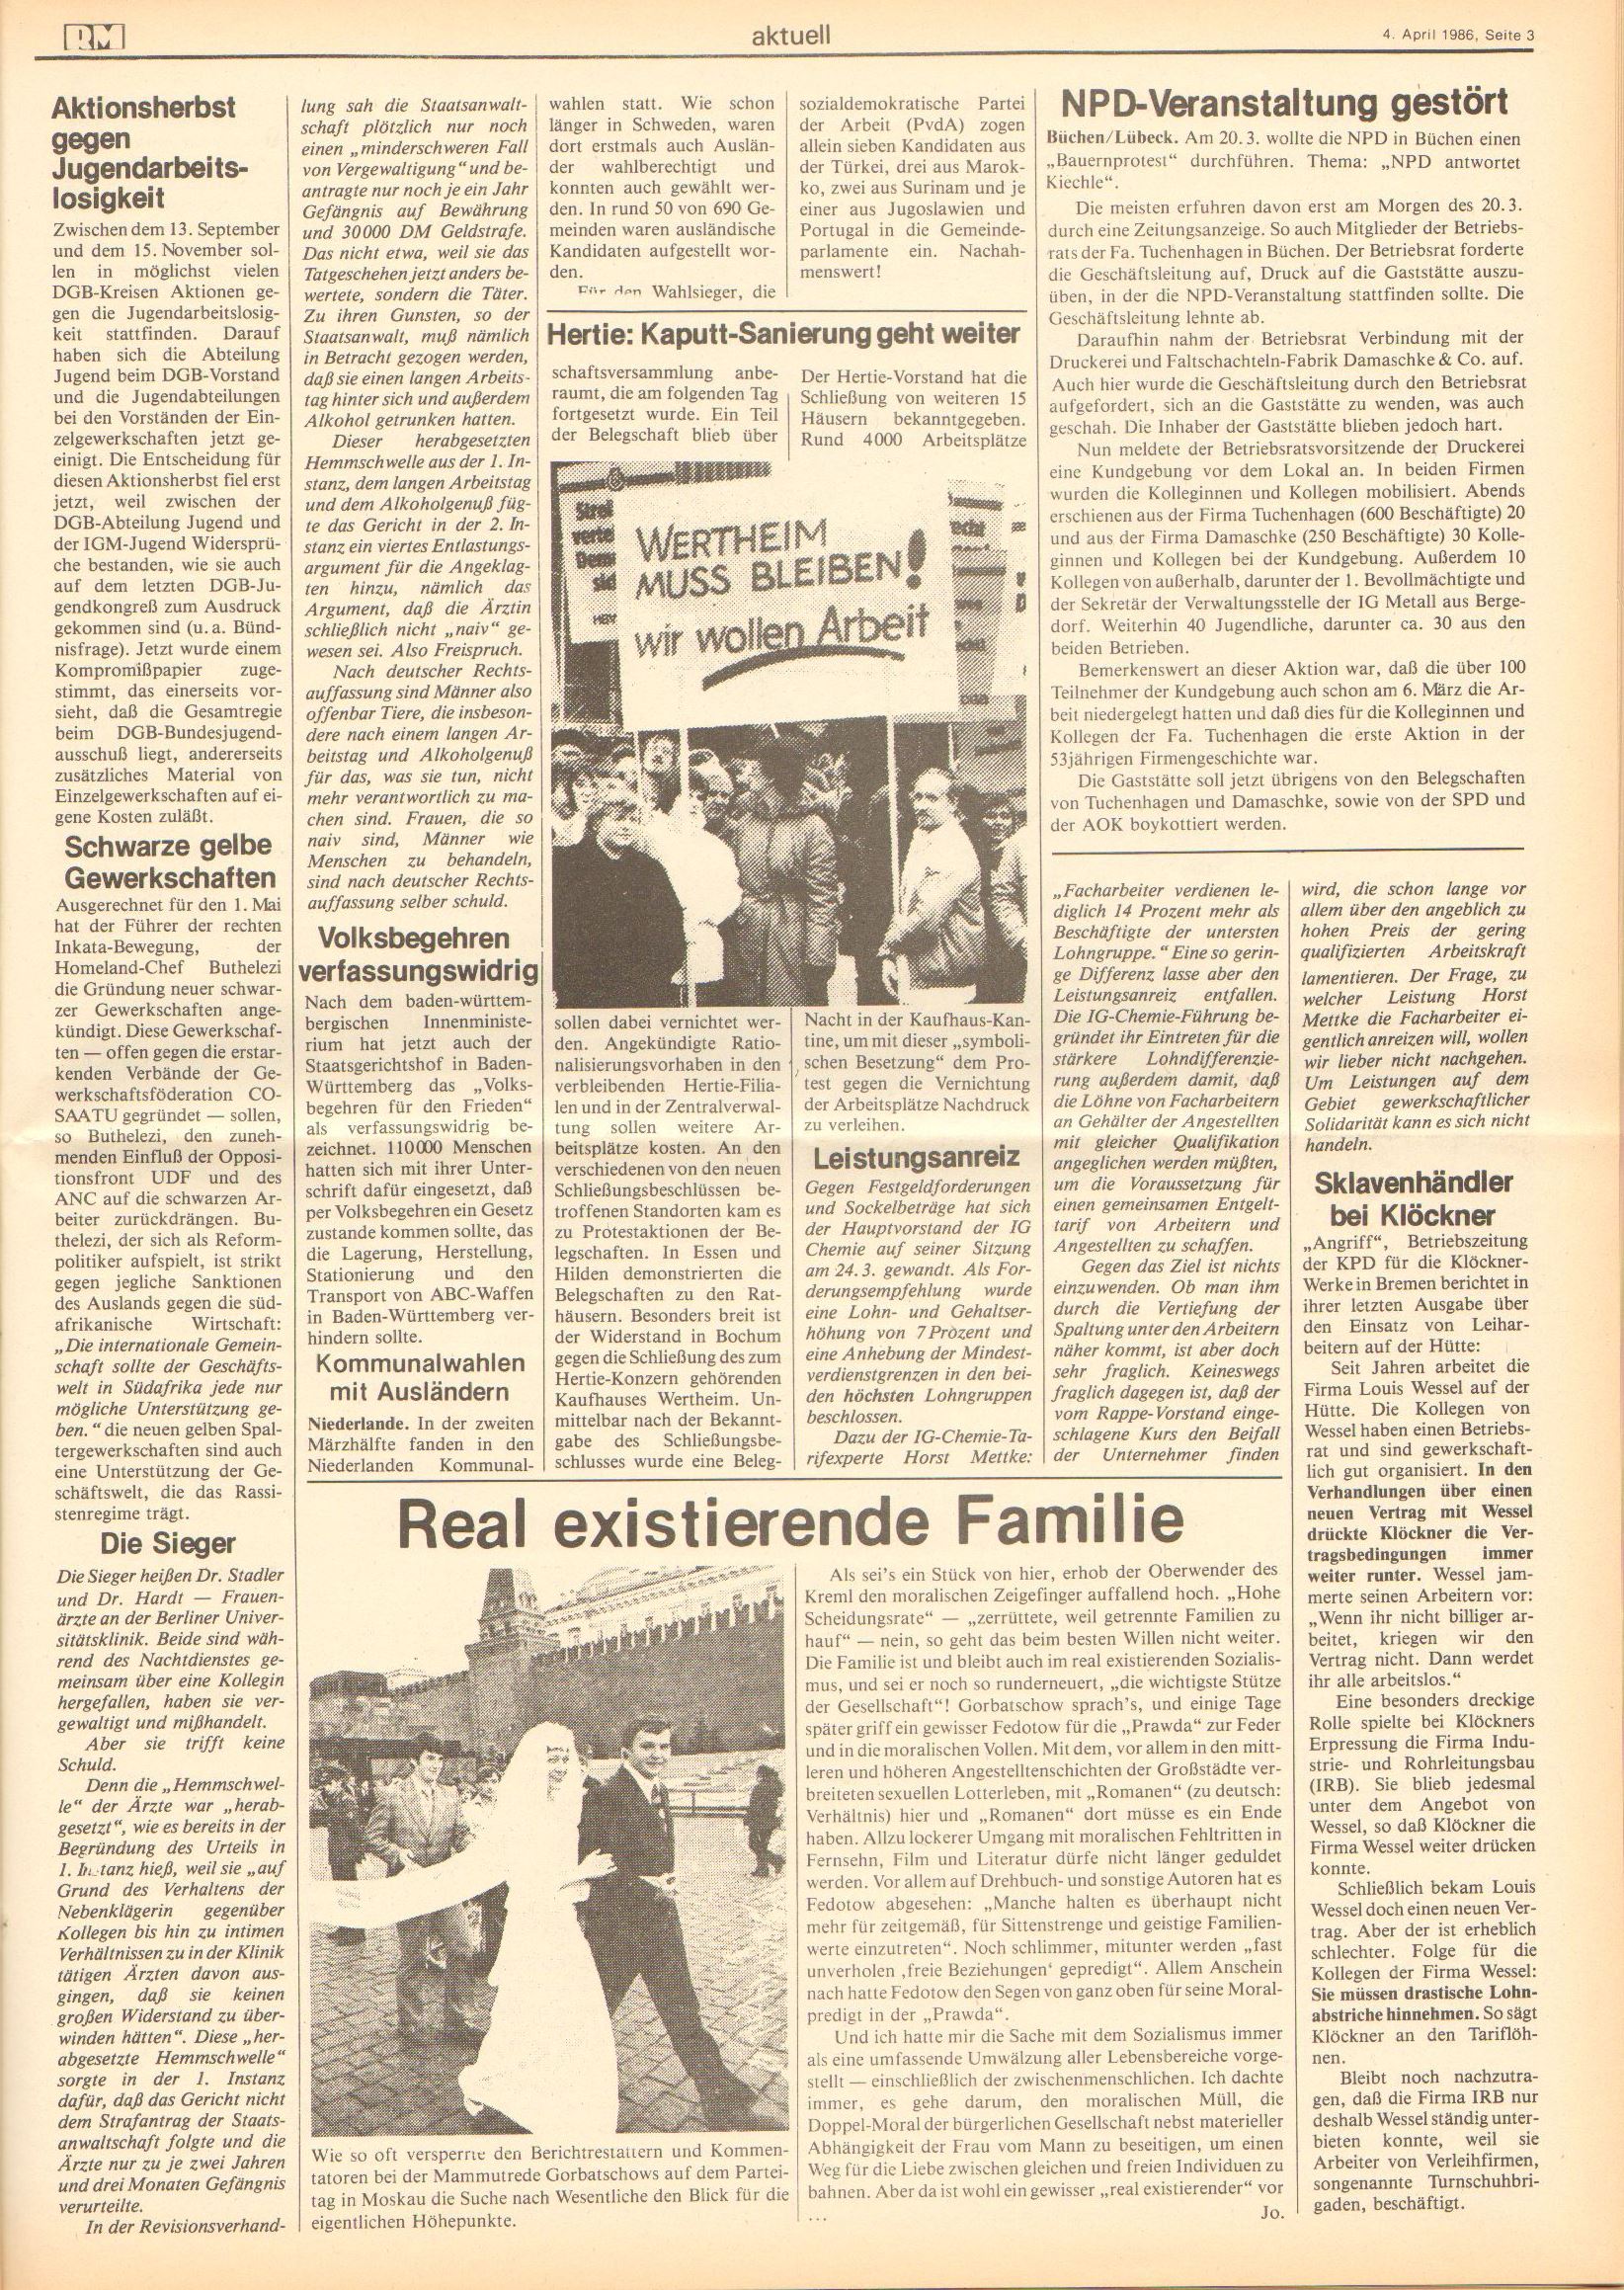 Roter Morgen, 20. Jg., 4. April 1986, Nr. 10, Seite 3